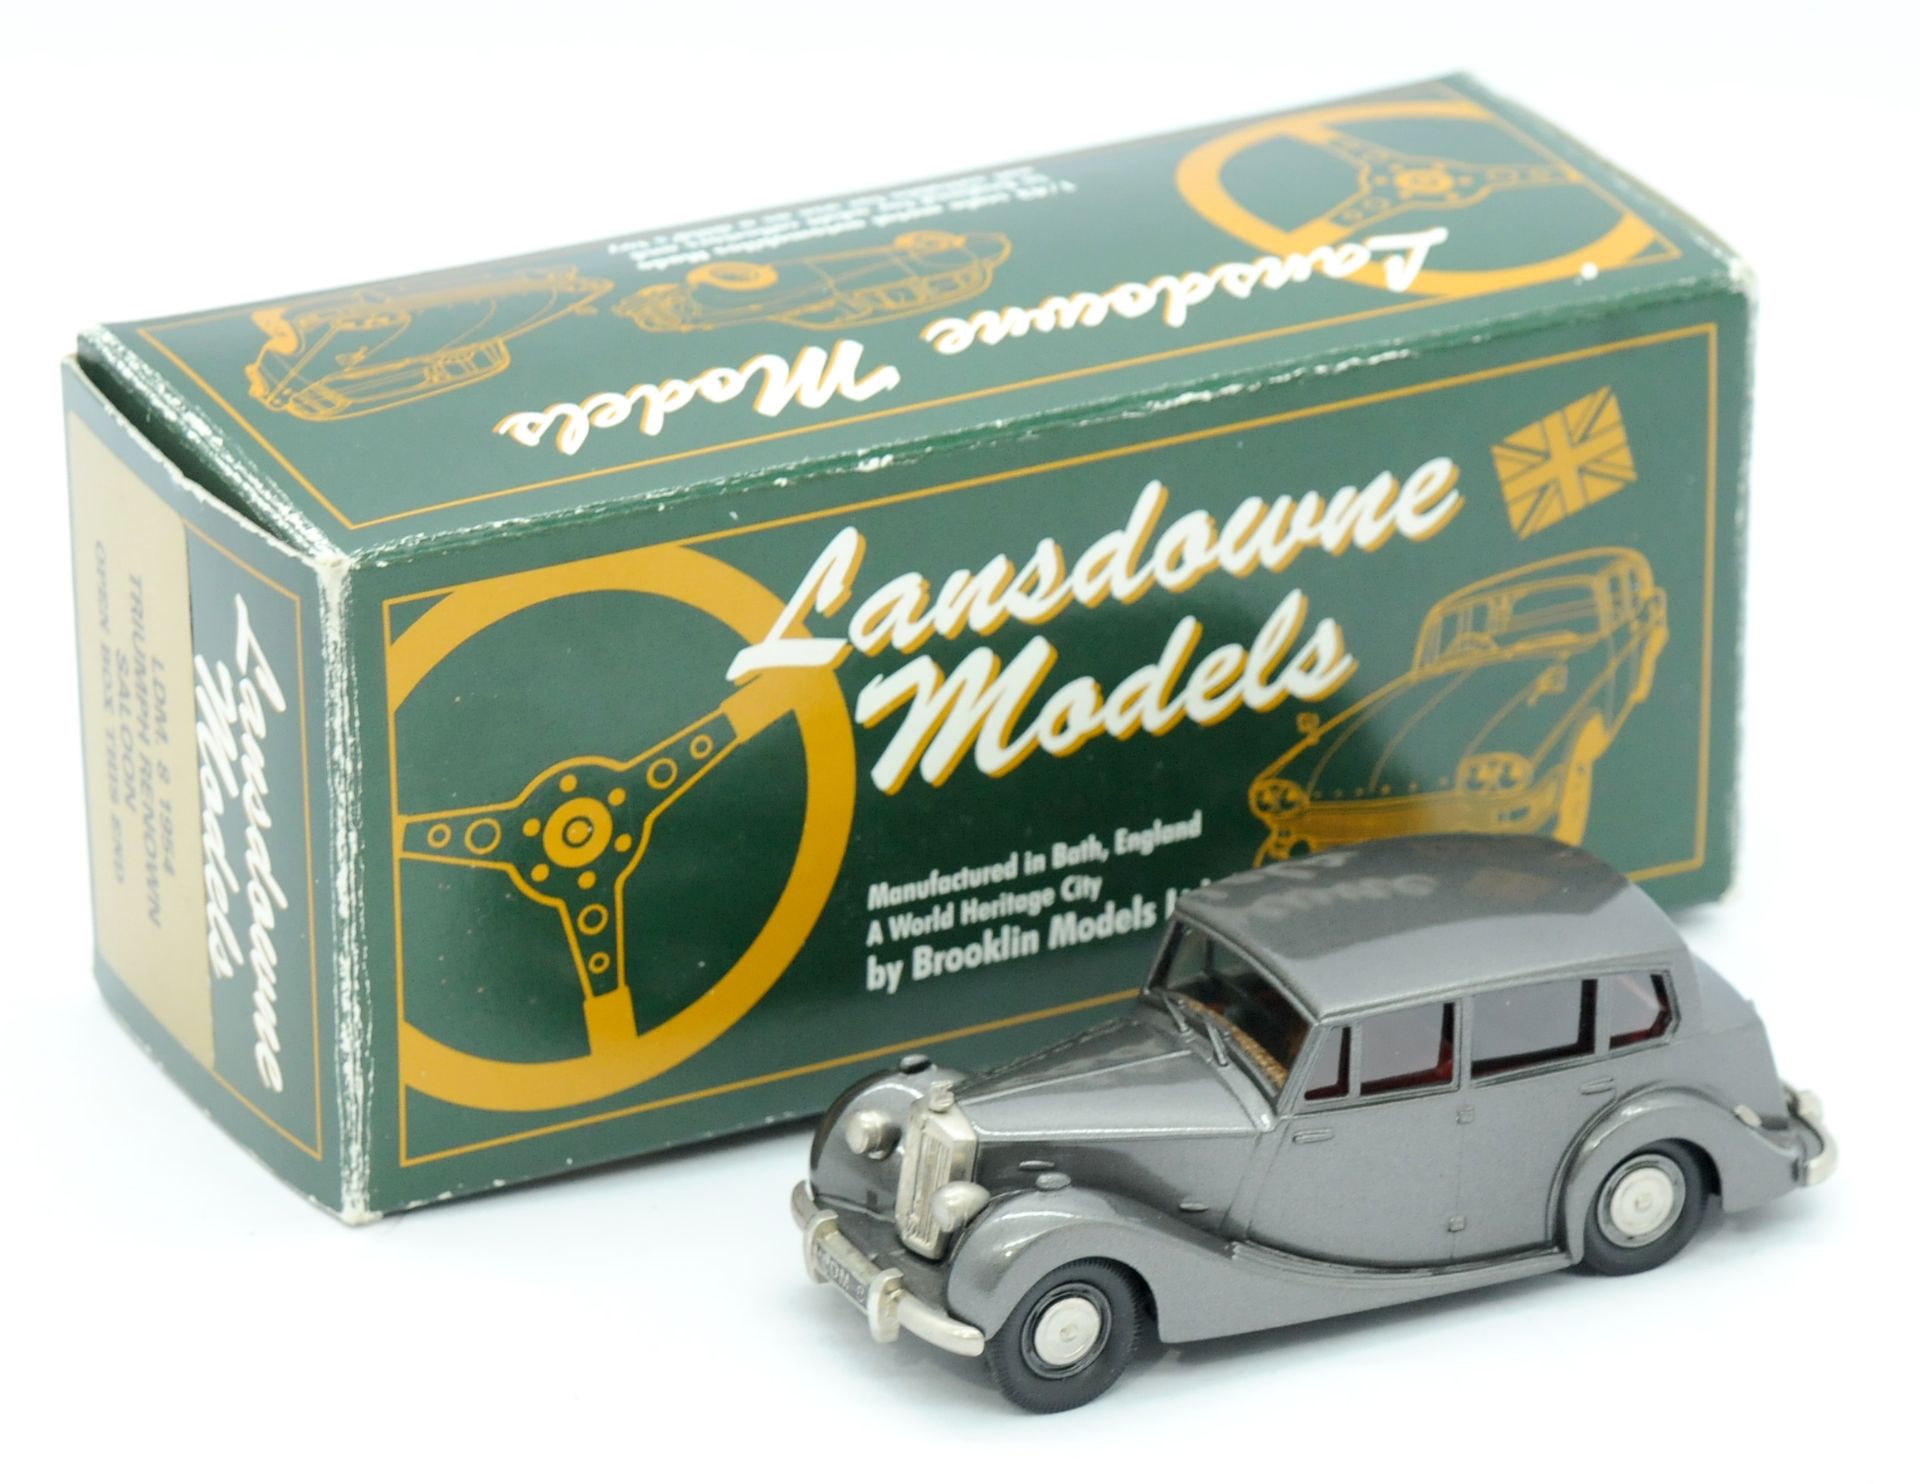 Lansdowne Models LDM8 1954 Triumph Renown Saloon